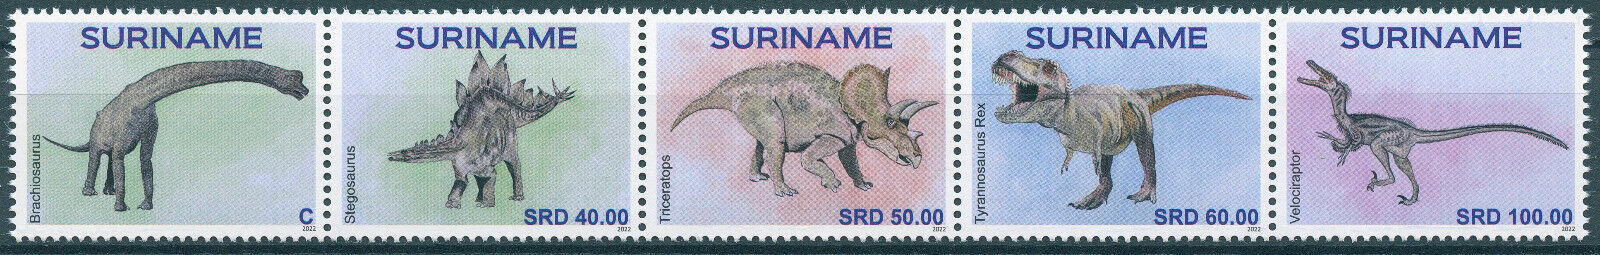 Suriname 2022 MNH Dinosaurs Stamps Prehistoric Animals T-Rex 5v Strip